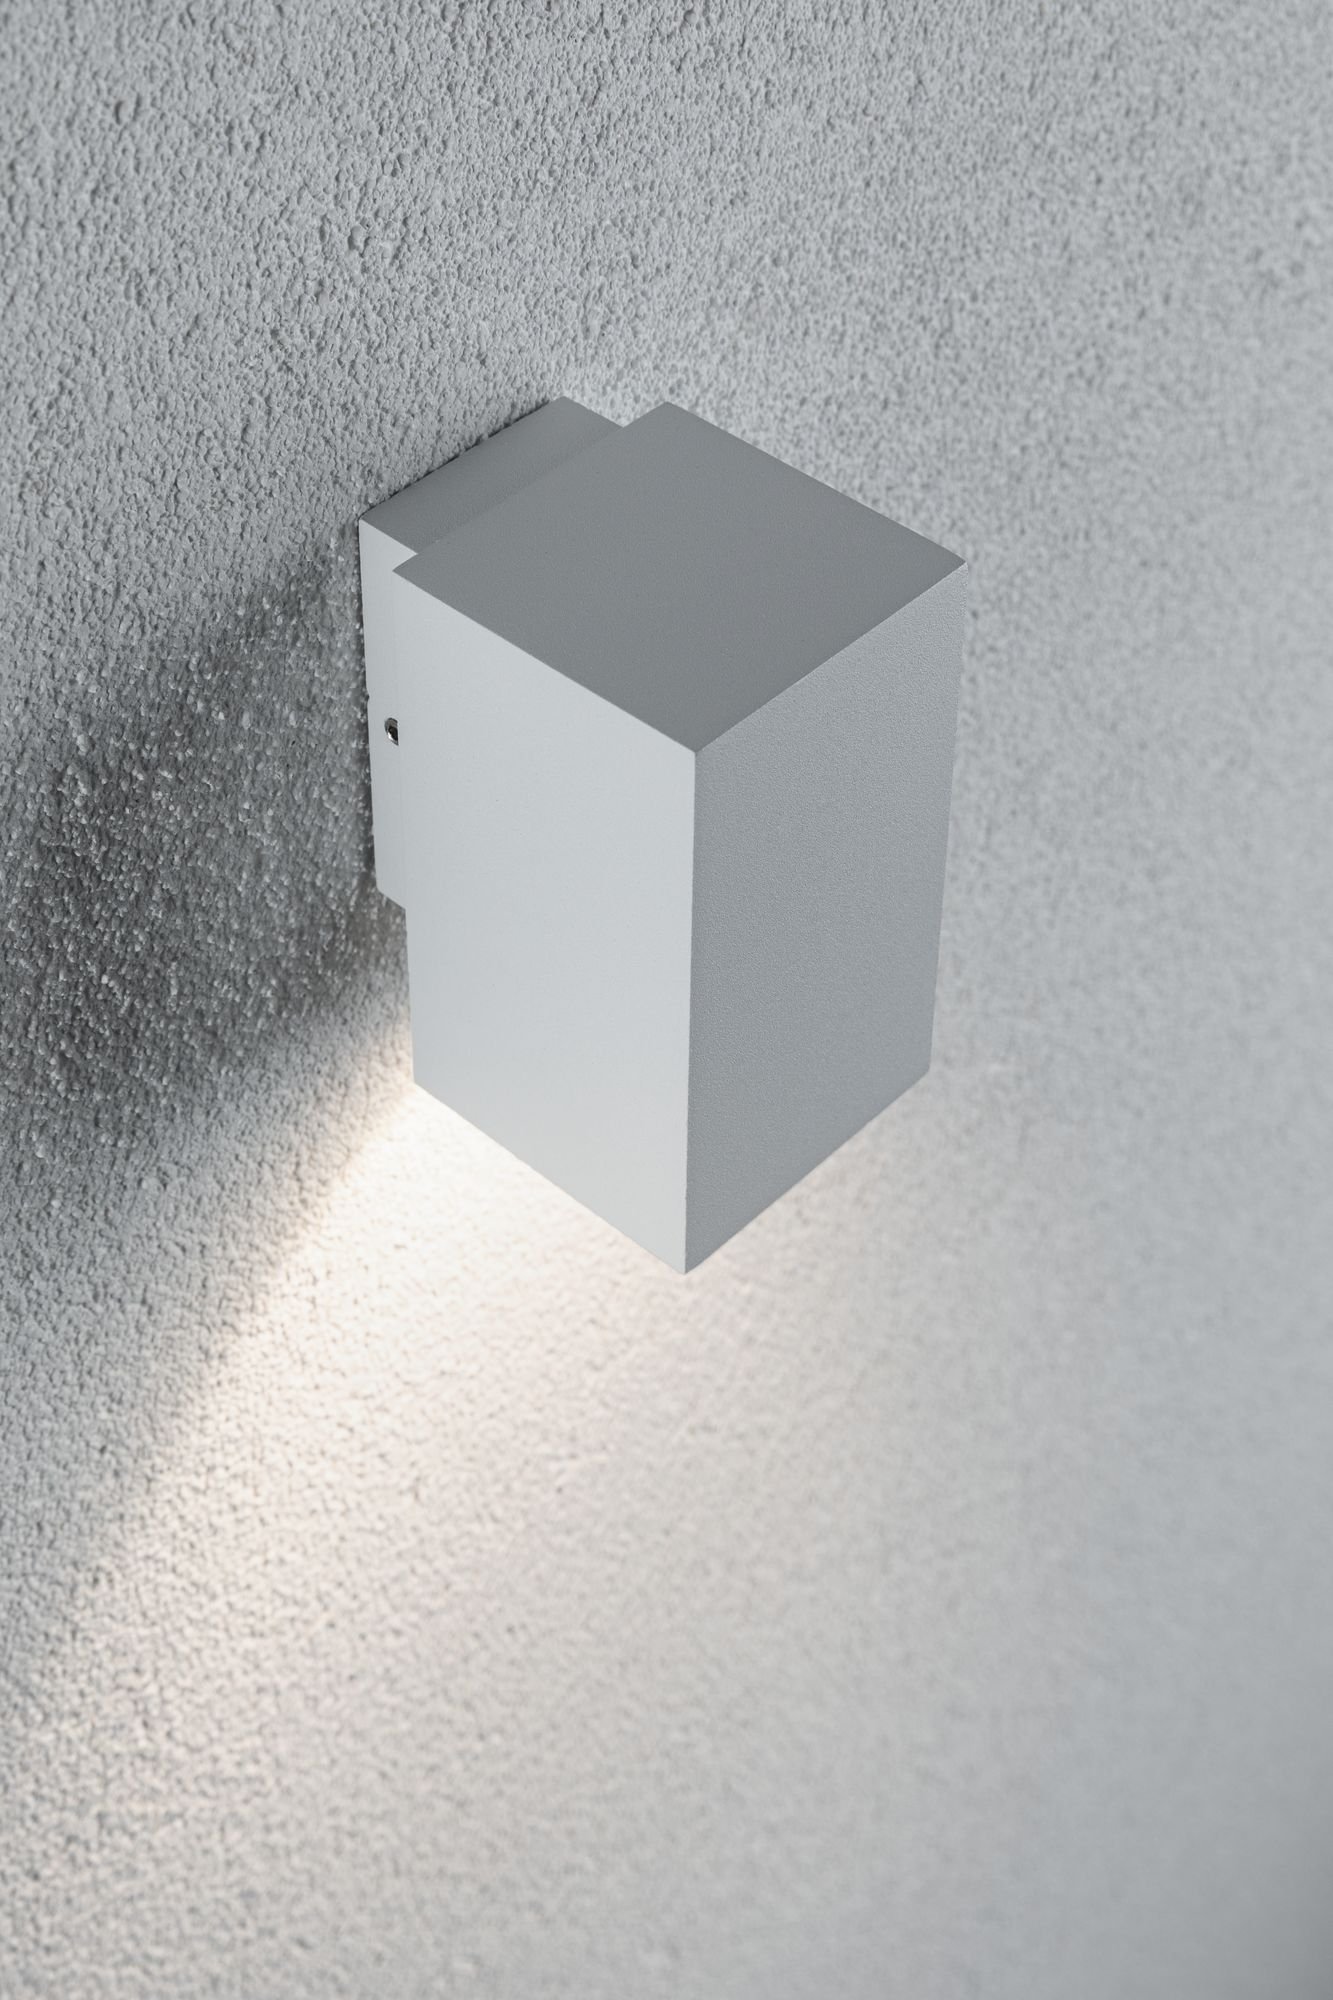 LED Außenwandleuchte Flame IP44 eckig 58x75mm 3000K 3,8W 320lm 230V Weiß Aluminium